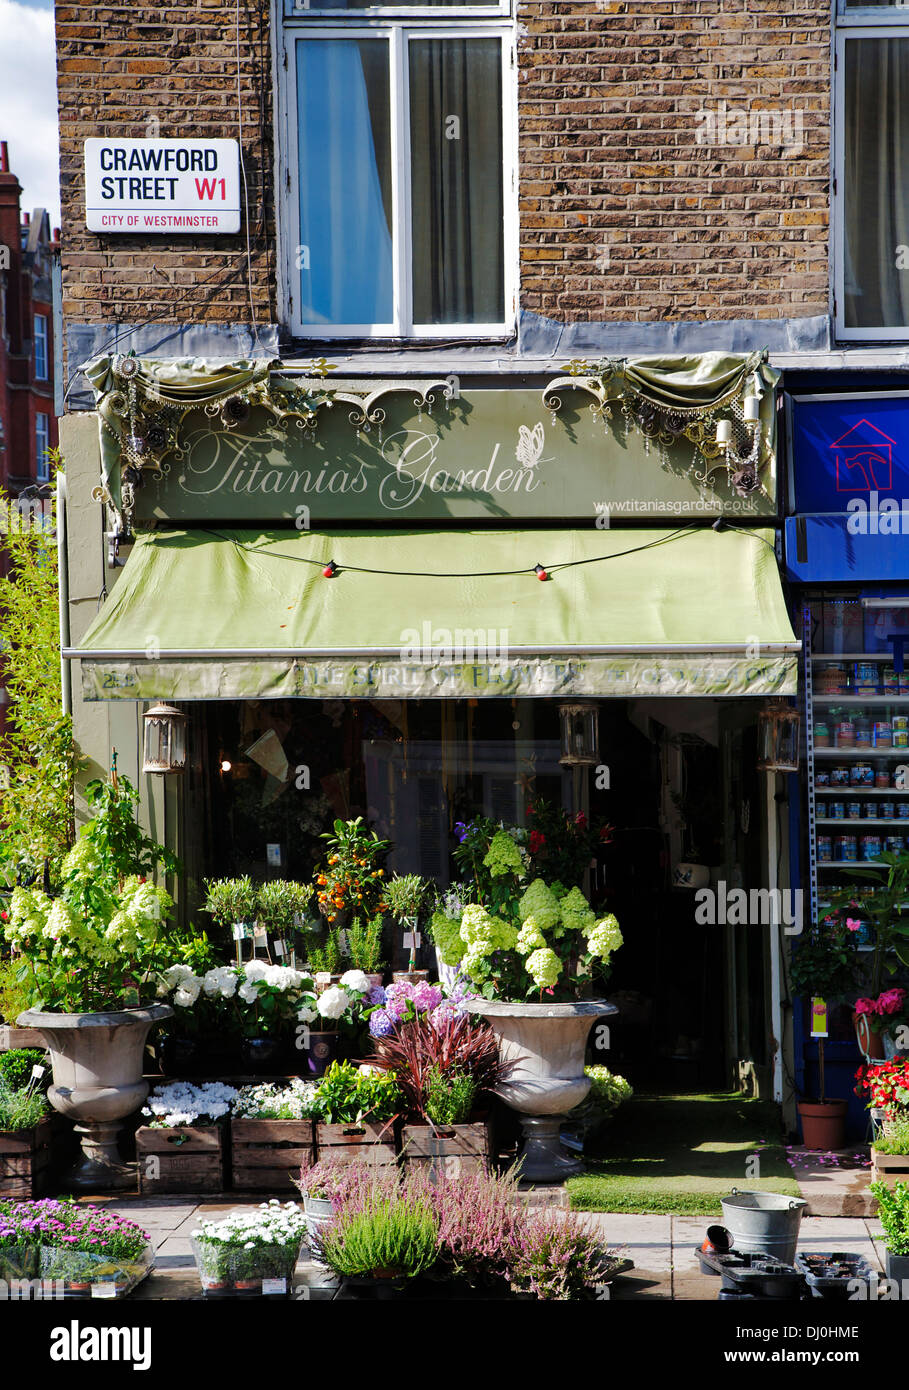 Titanias Garden Flower Shop, Crawford Street, Marylebone, London, England, UK, Europe Stock Photo